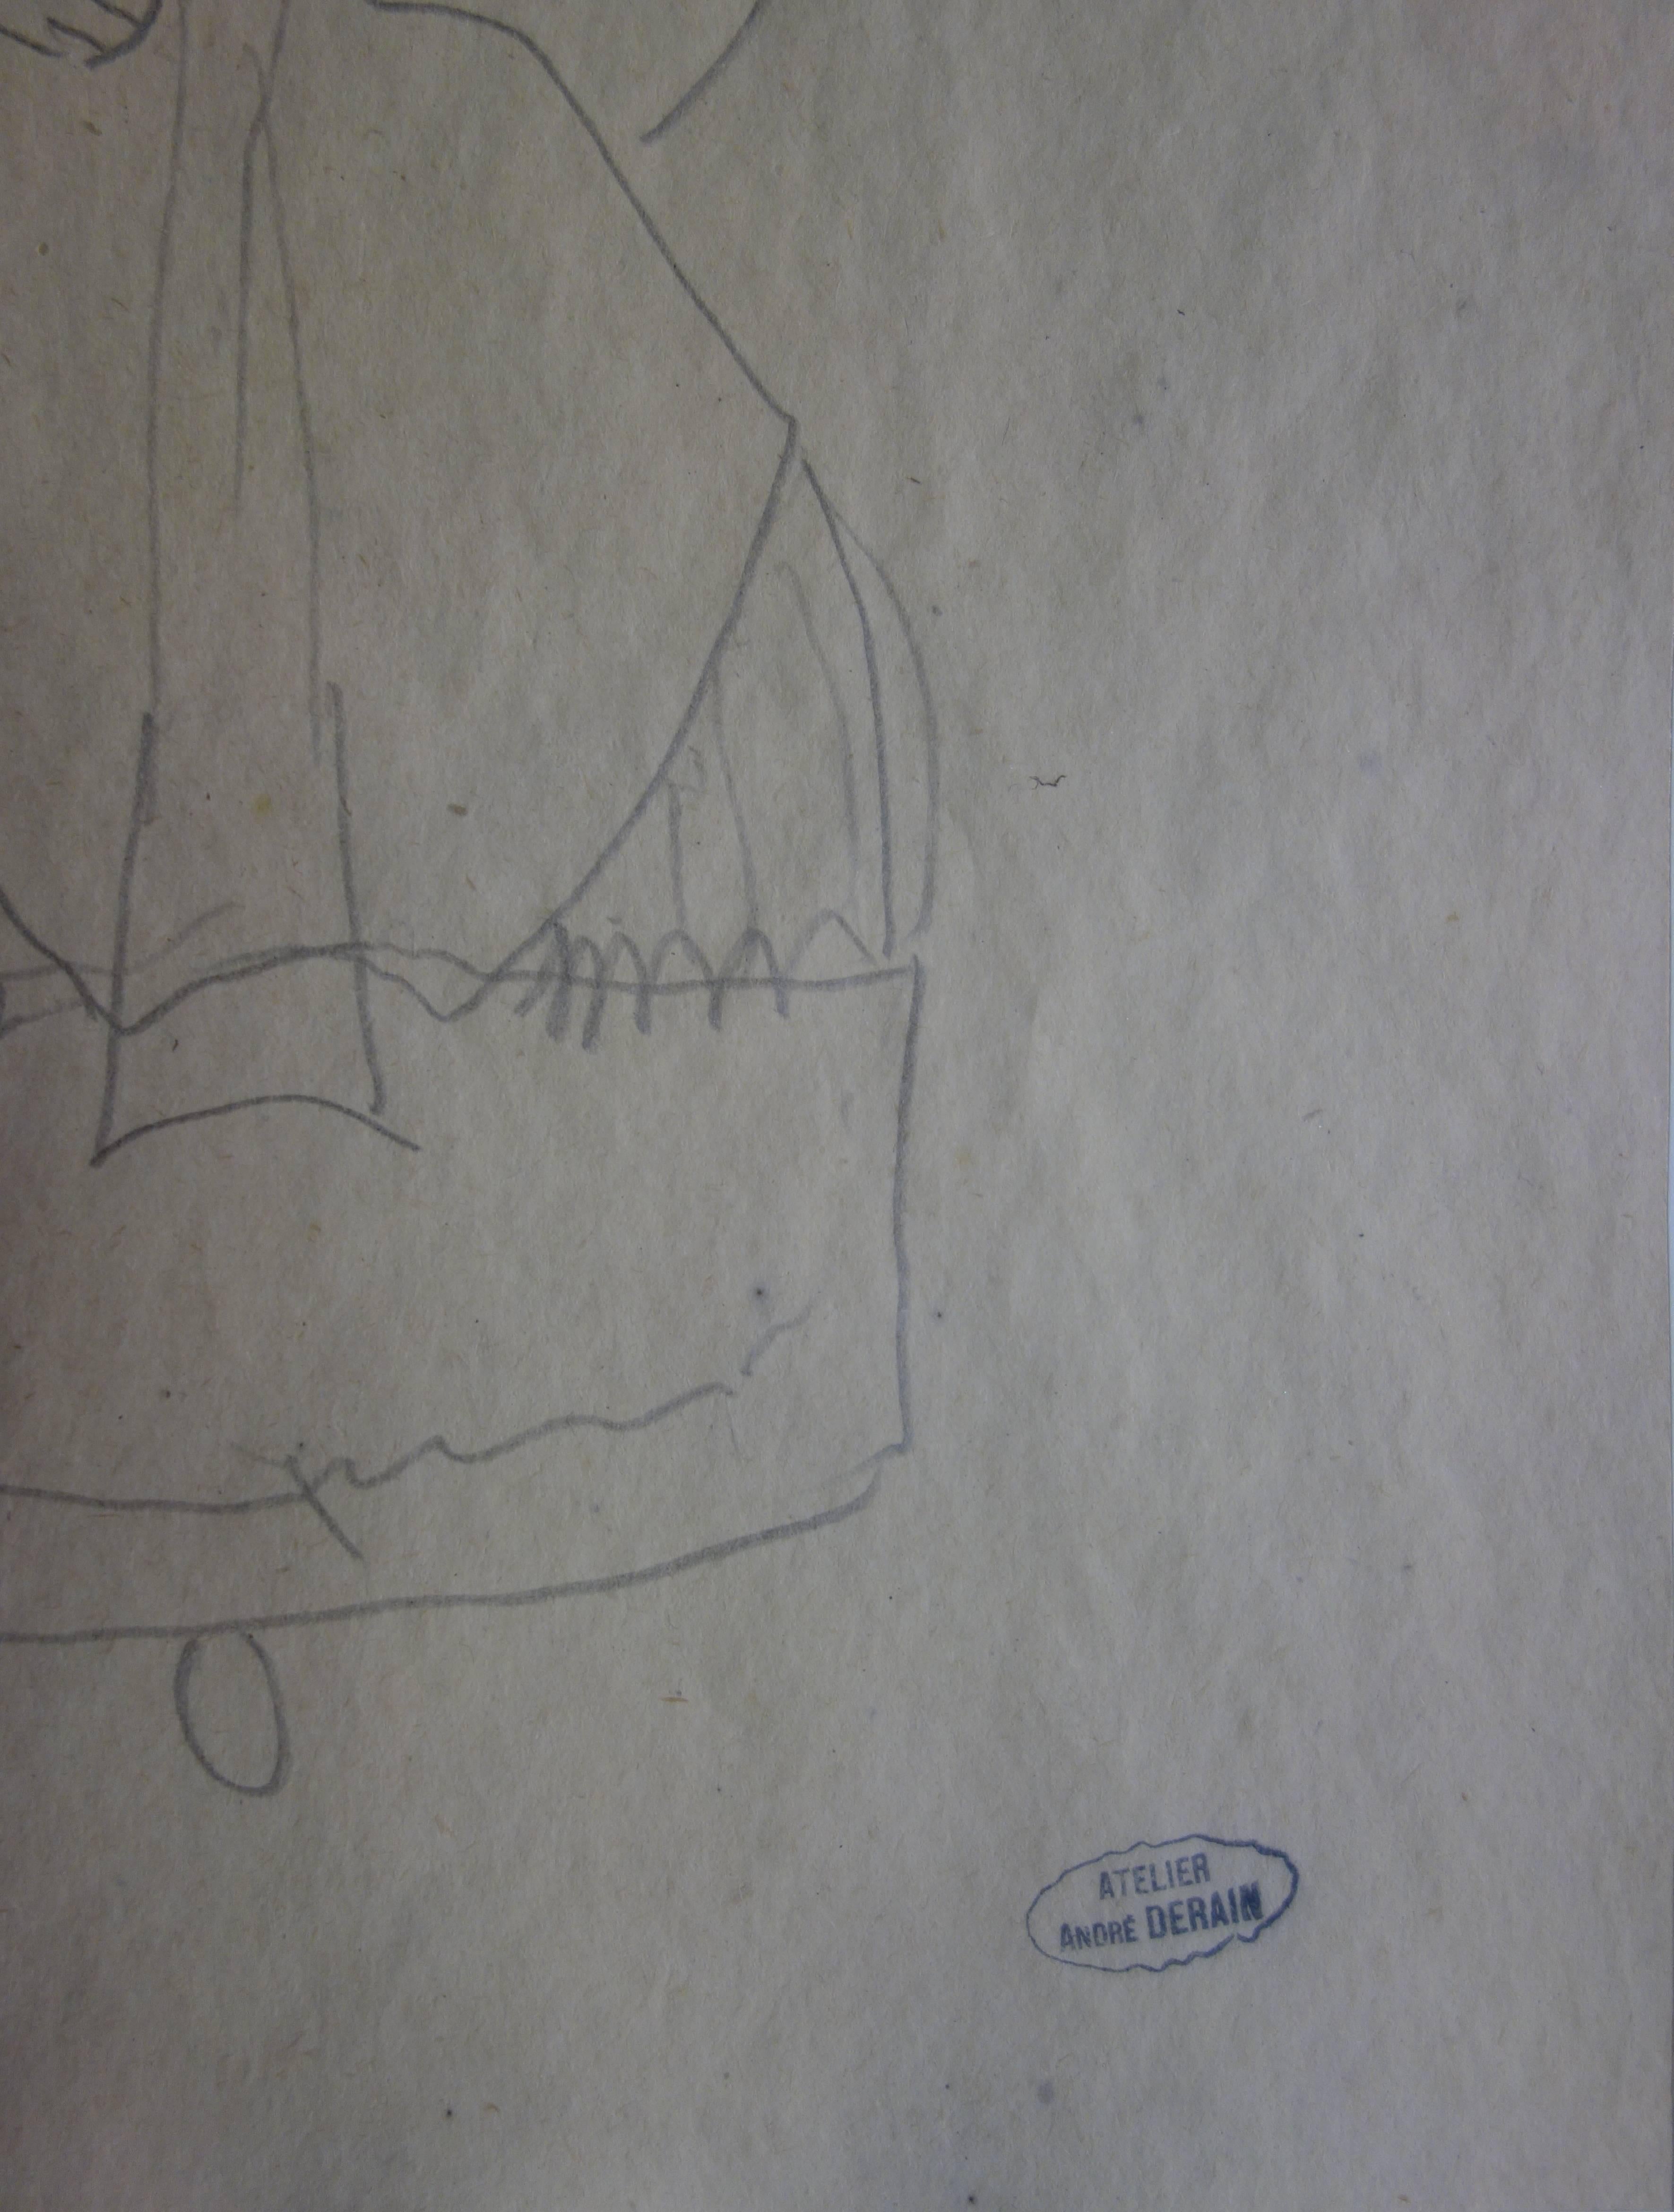 Opera singer - Original signed drawing  - Modern Art by André Derain